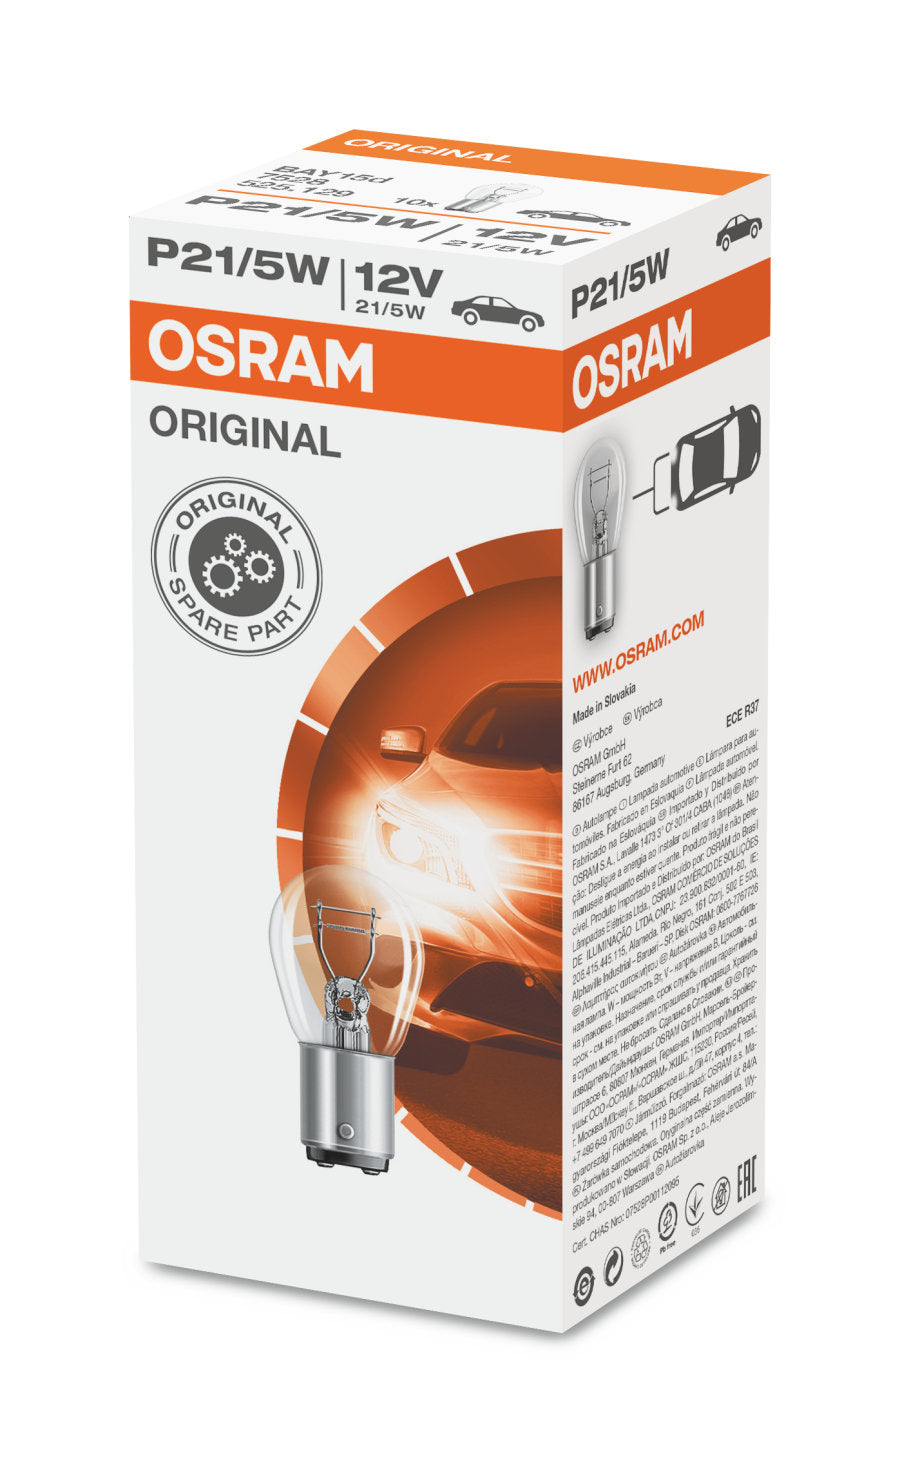 Osram LEDriving SL 501 W5W x 2 LED bulbs (Amber/Red/White)  HIDS Direct  for HID Xenon kits, Xenon bulbs, MTEC bulbs, LED's, Car Parts and Air  Suspension